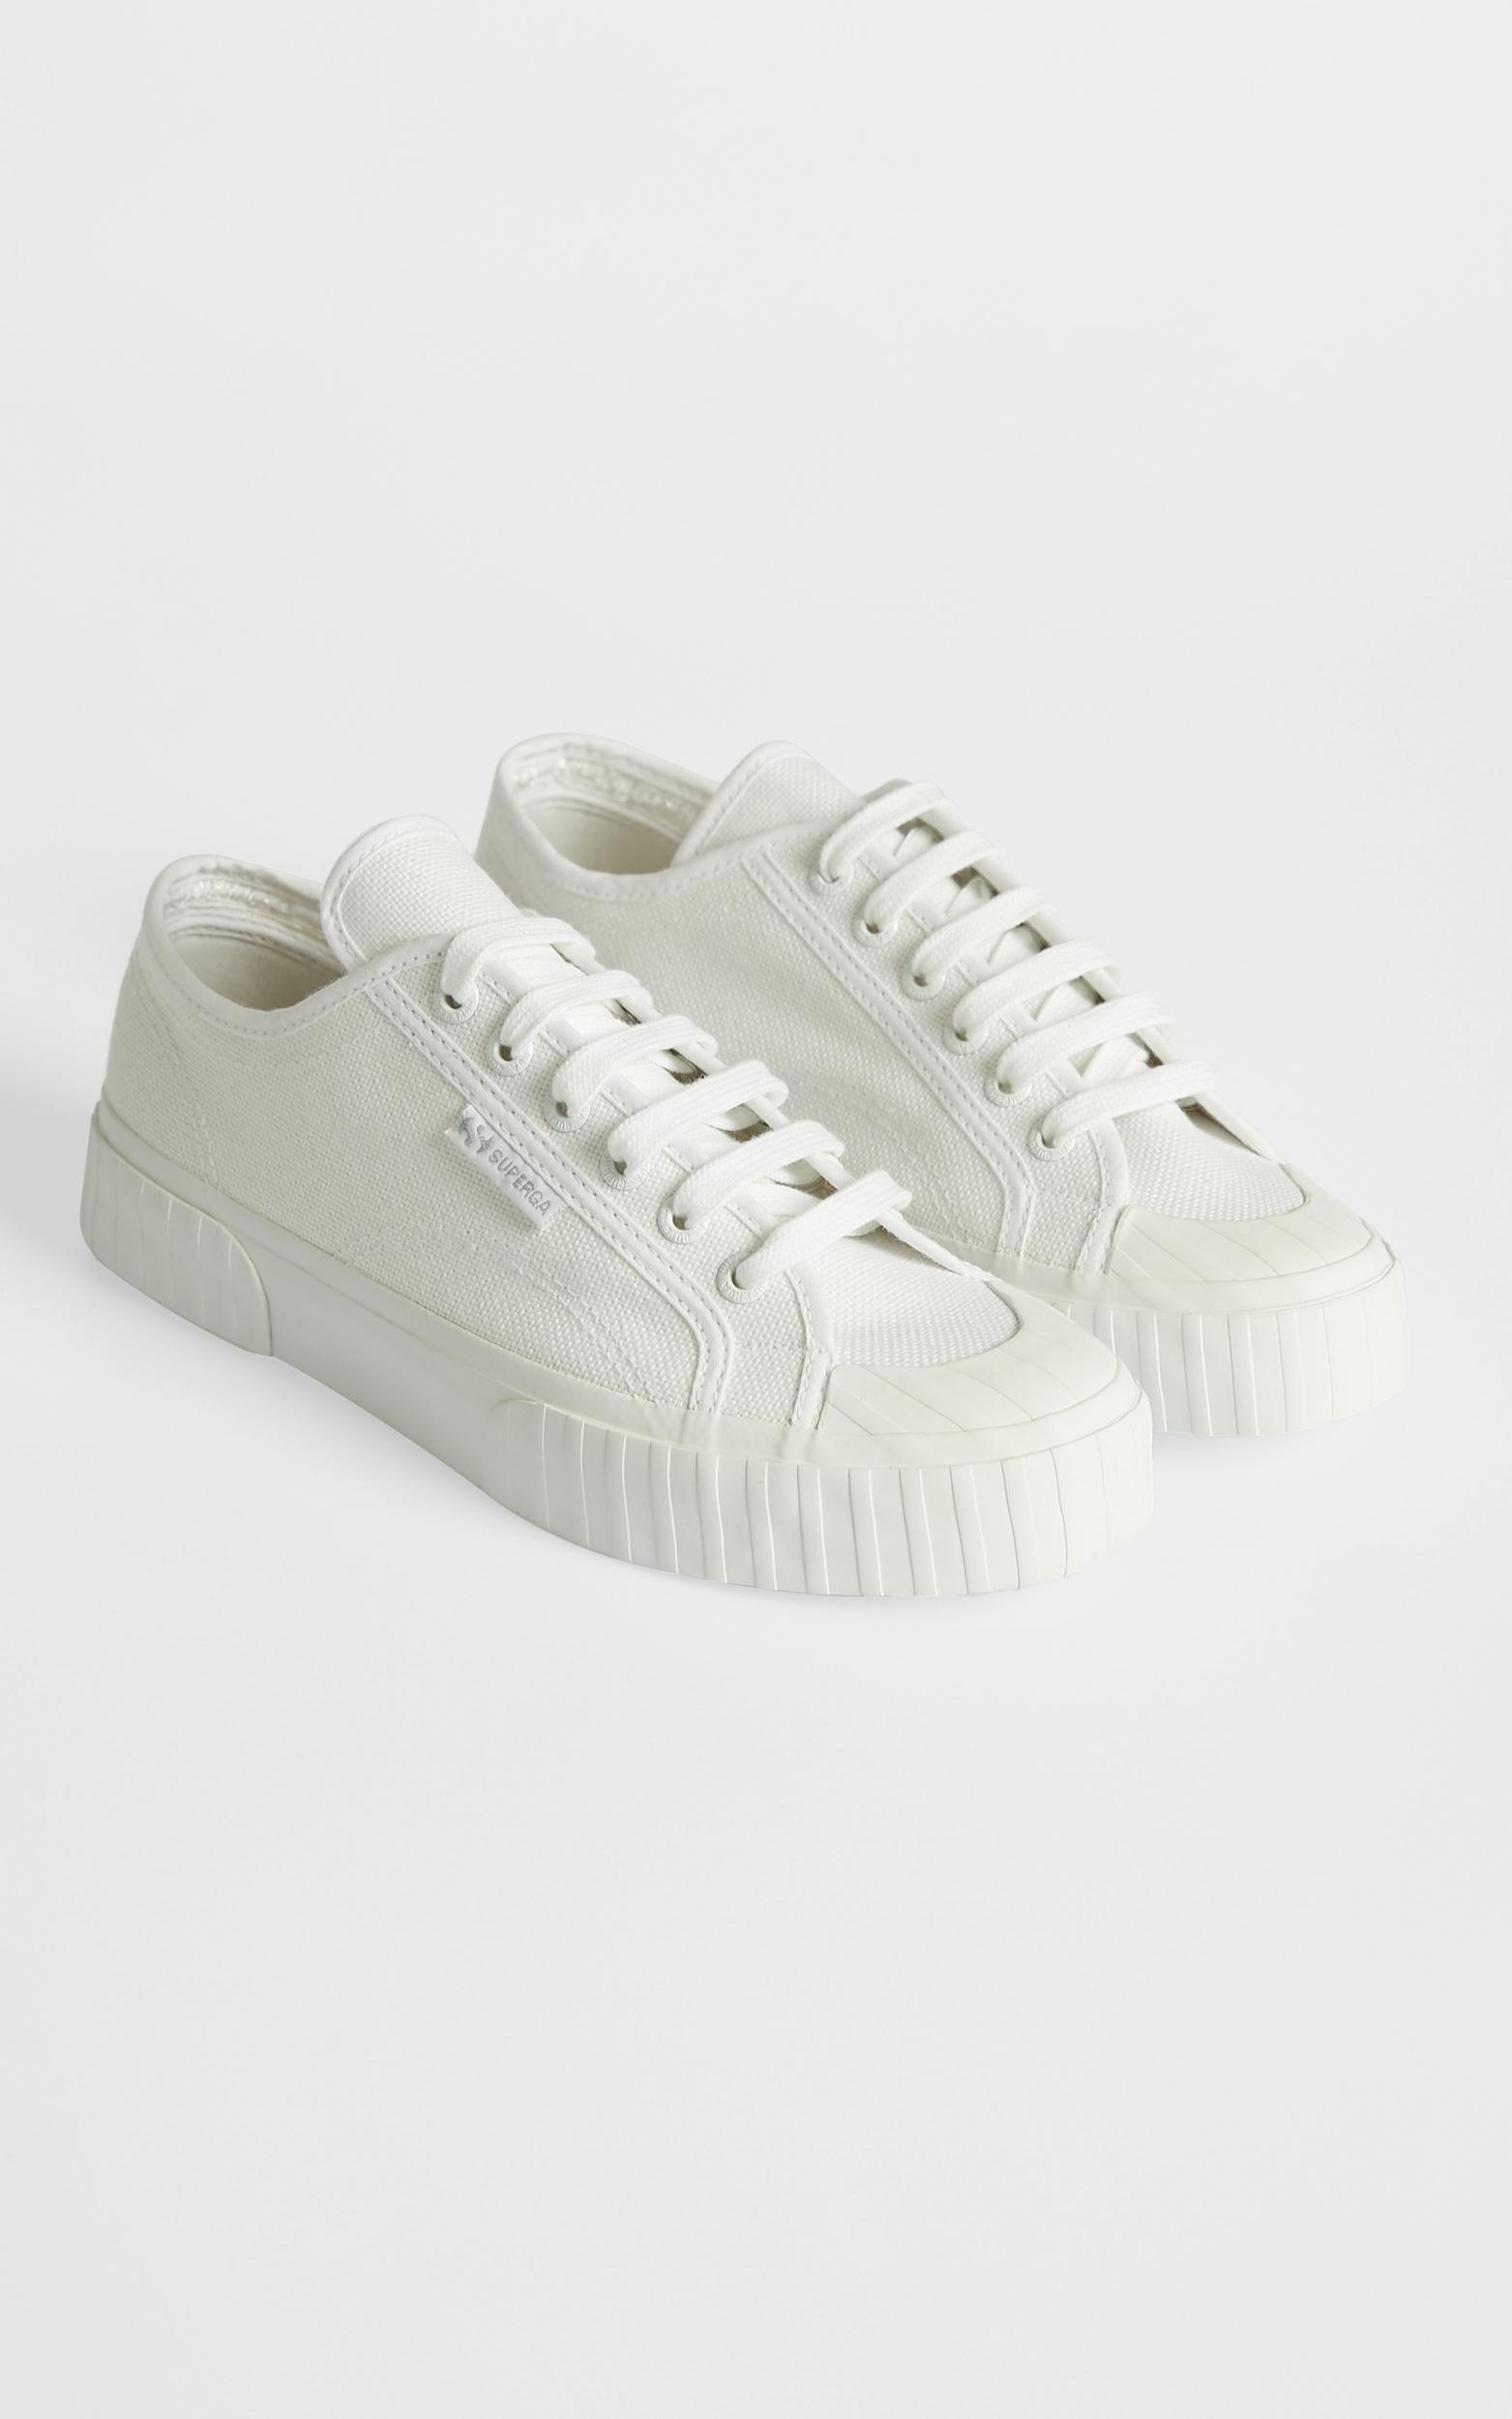 Superga - 2630 Cotu Sneakers in Total White | Showpo